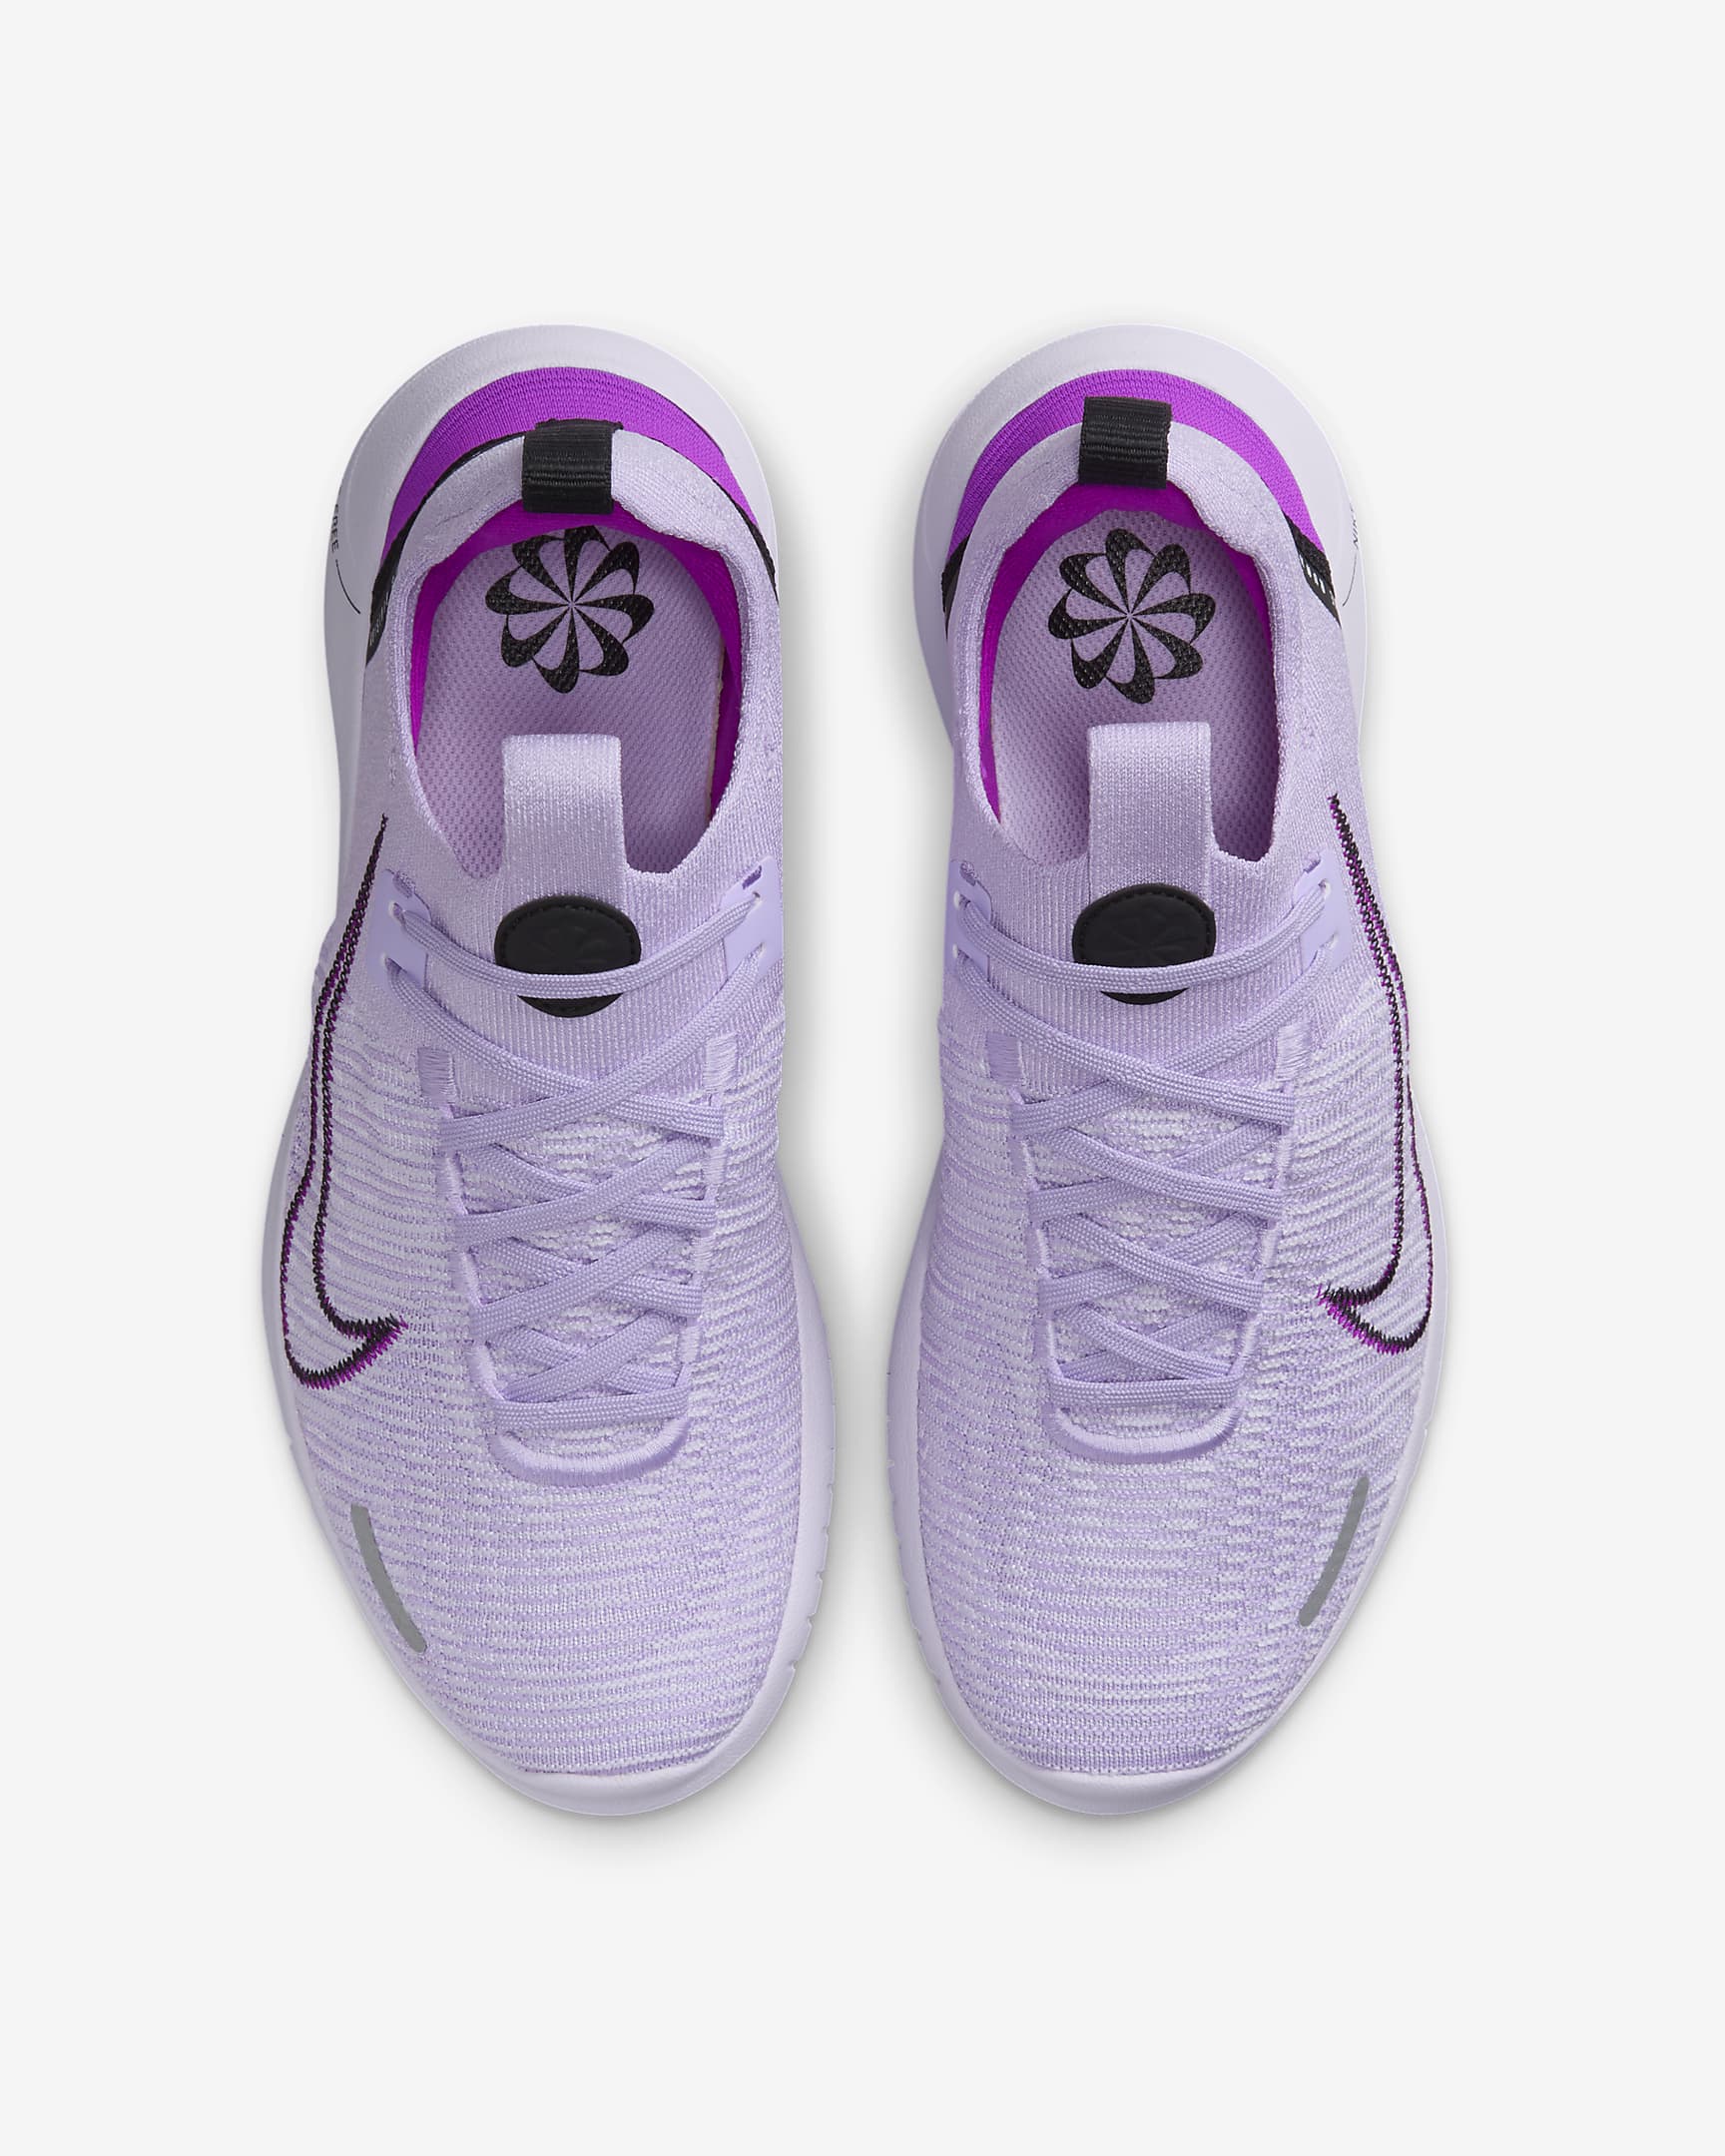 Nike Free RN NN Women's Road Running Shoes - Lilac Bloom/Barely Grape/Vivid Purple/Black